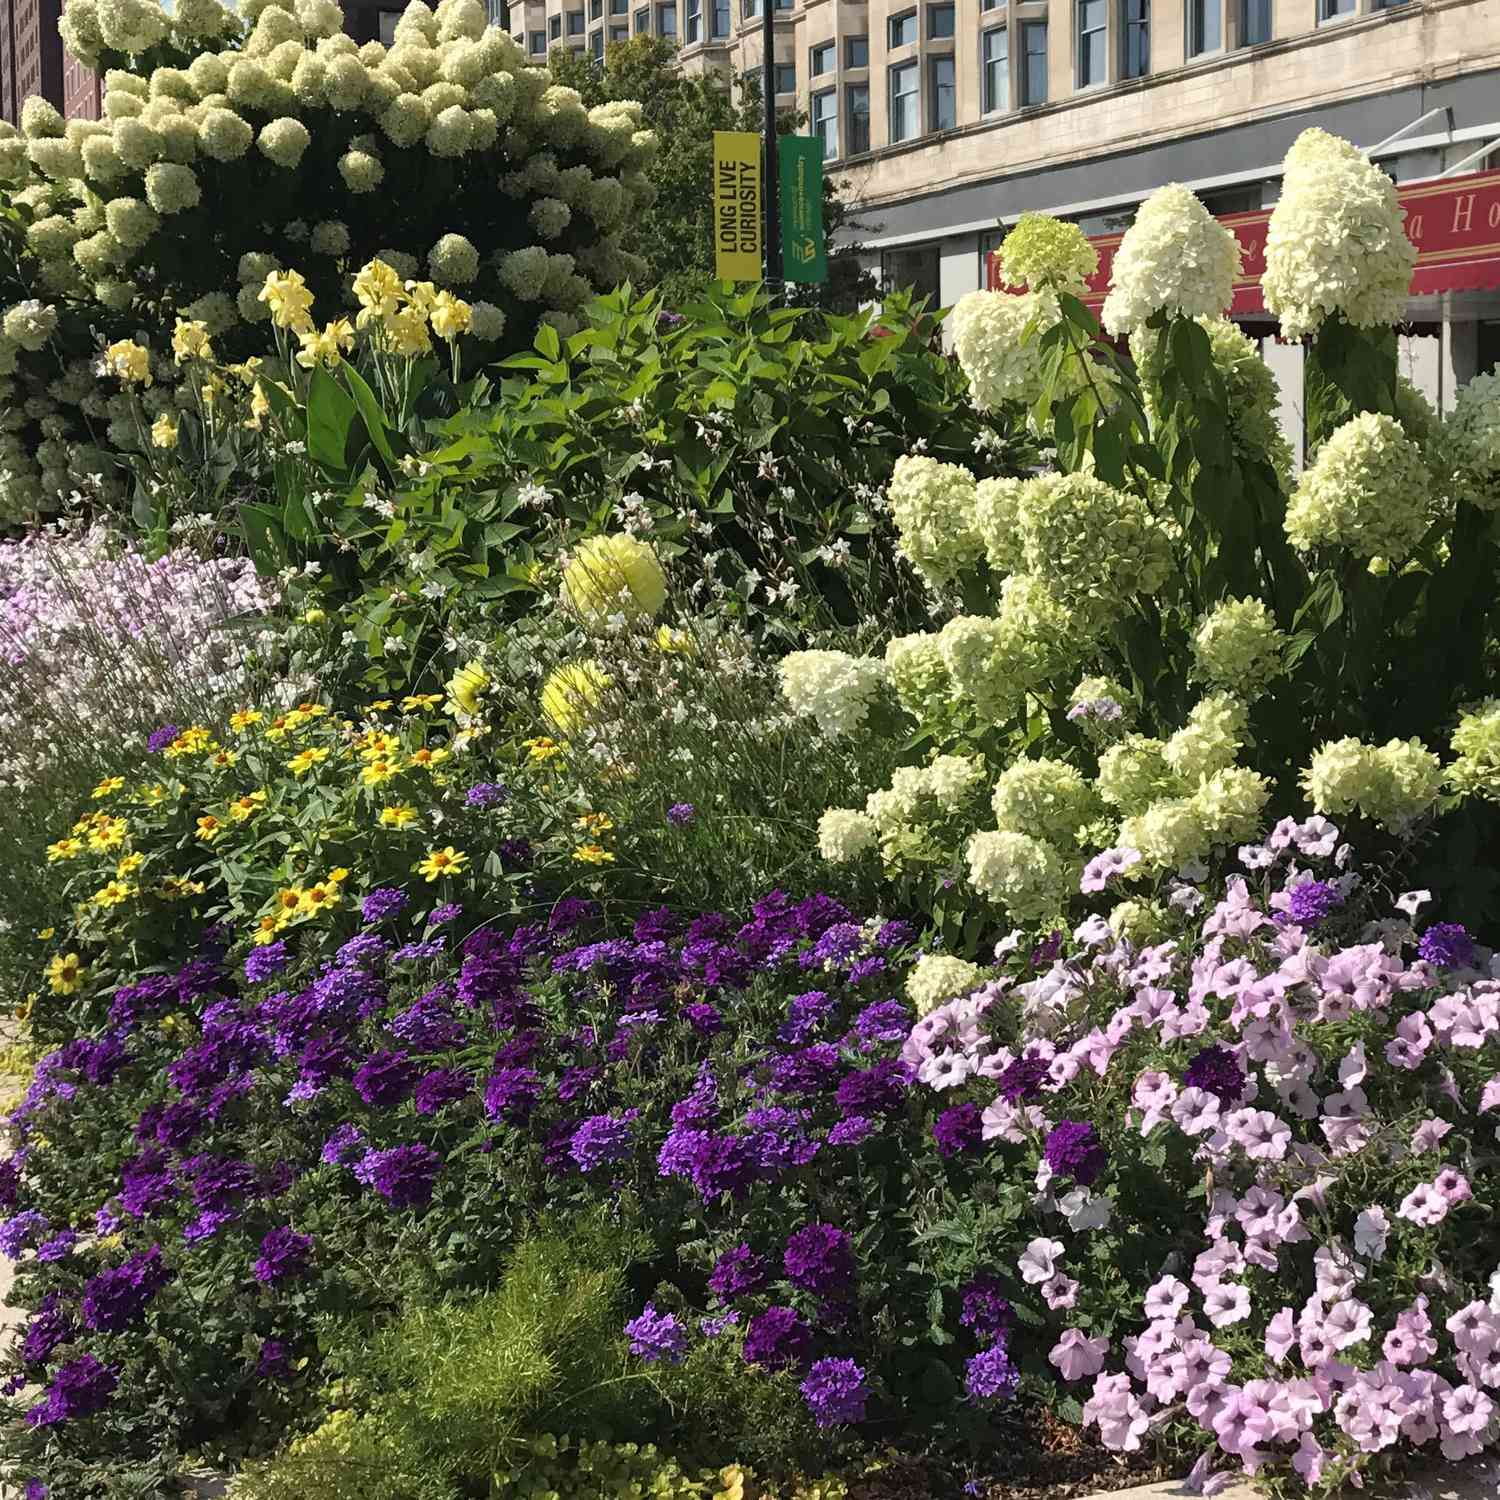 Michigan Avenue summer floral displays Chicago